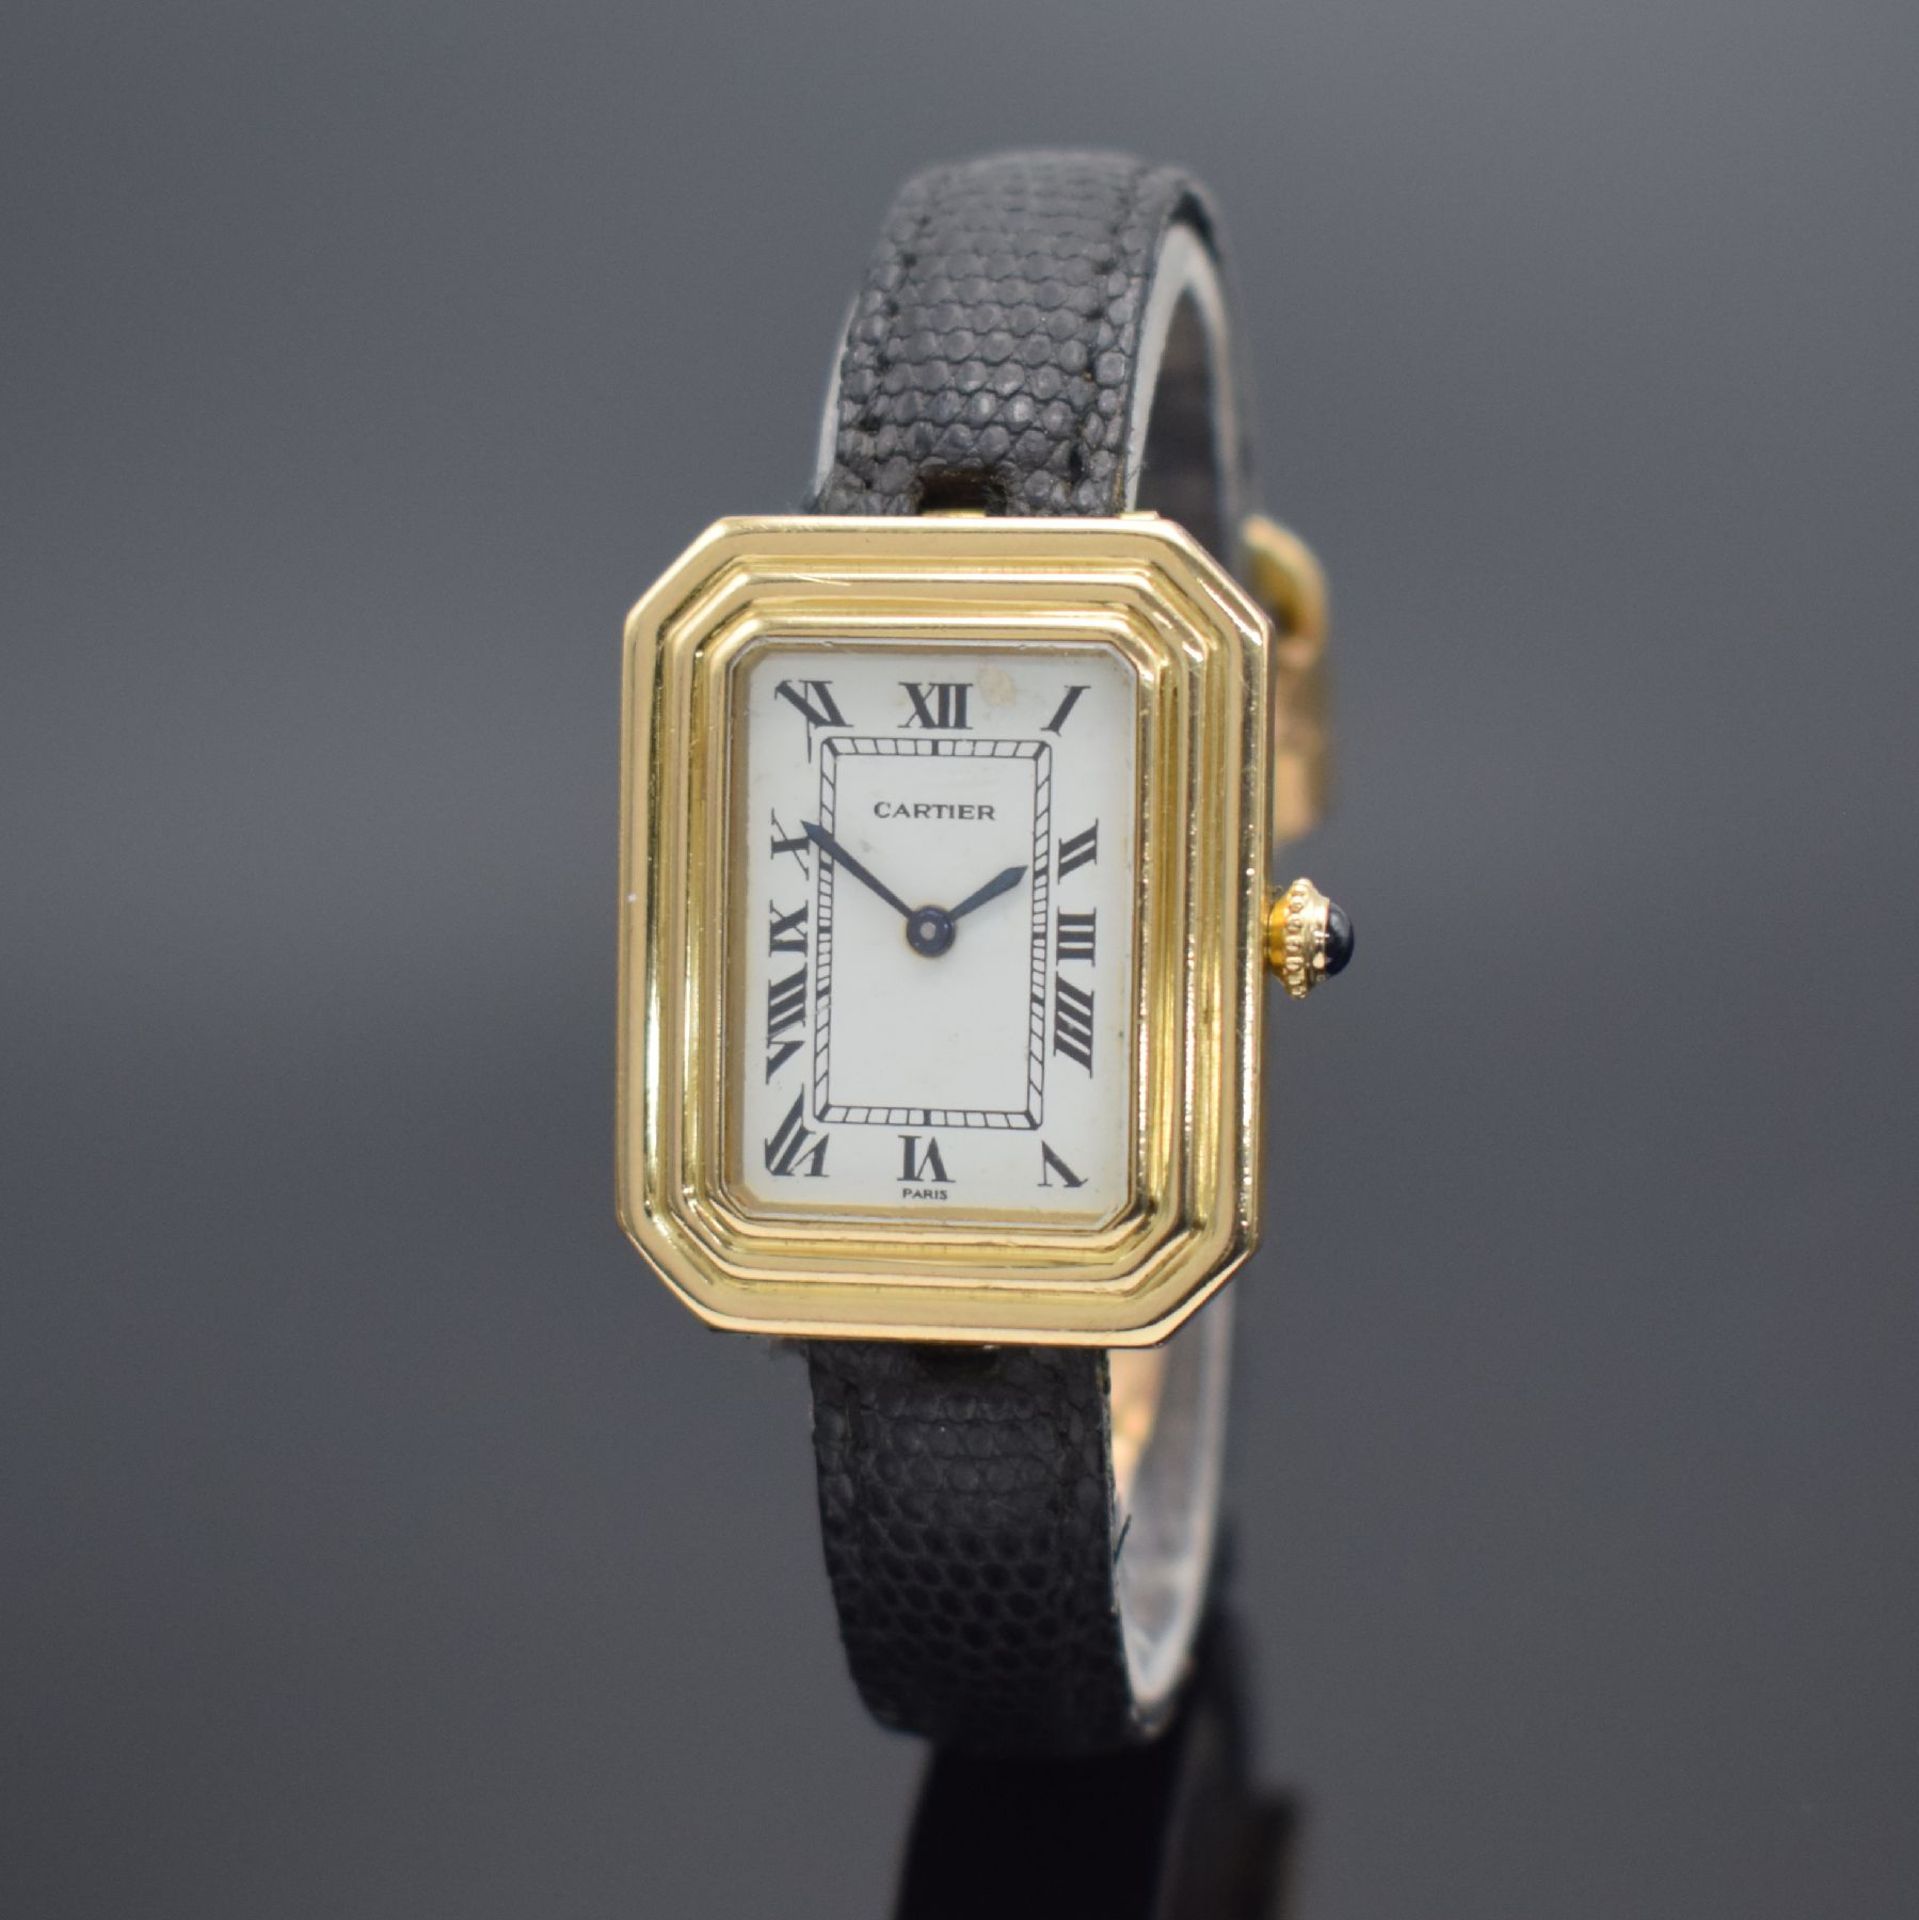 CARTIER Paris Square seltene Armbanduhr in GG 750/000,